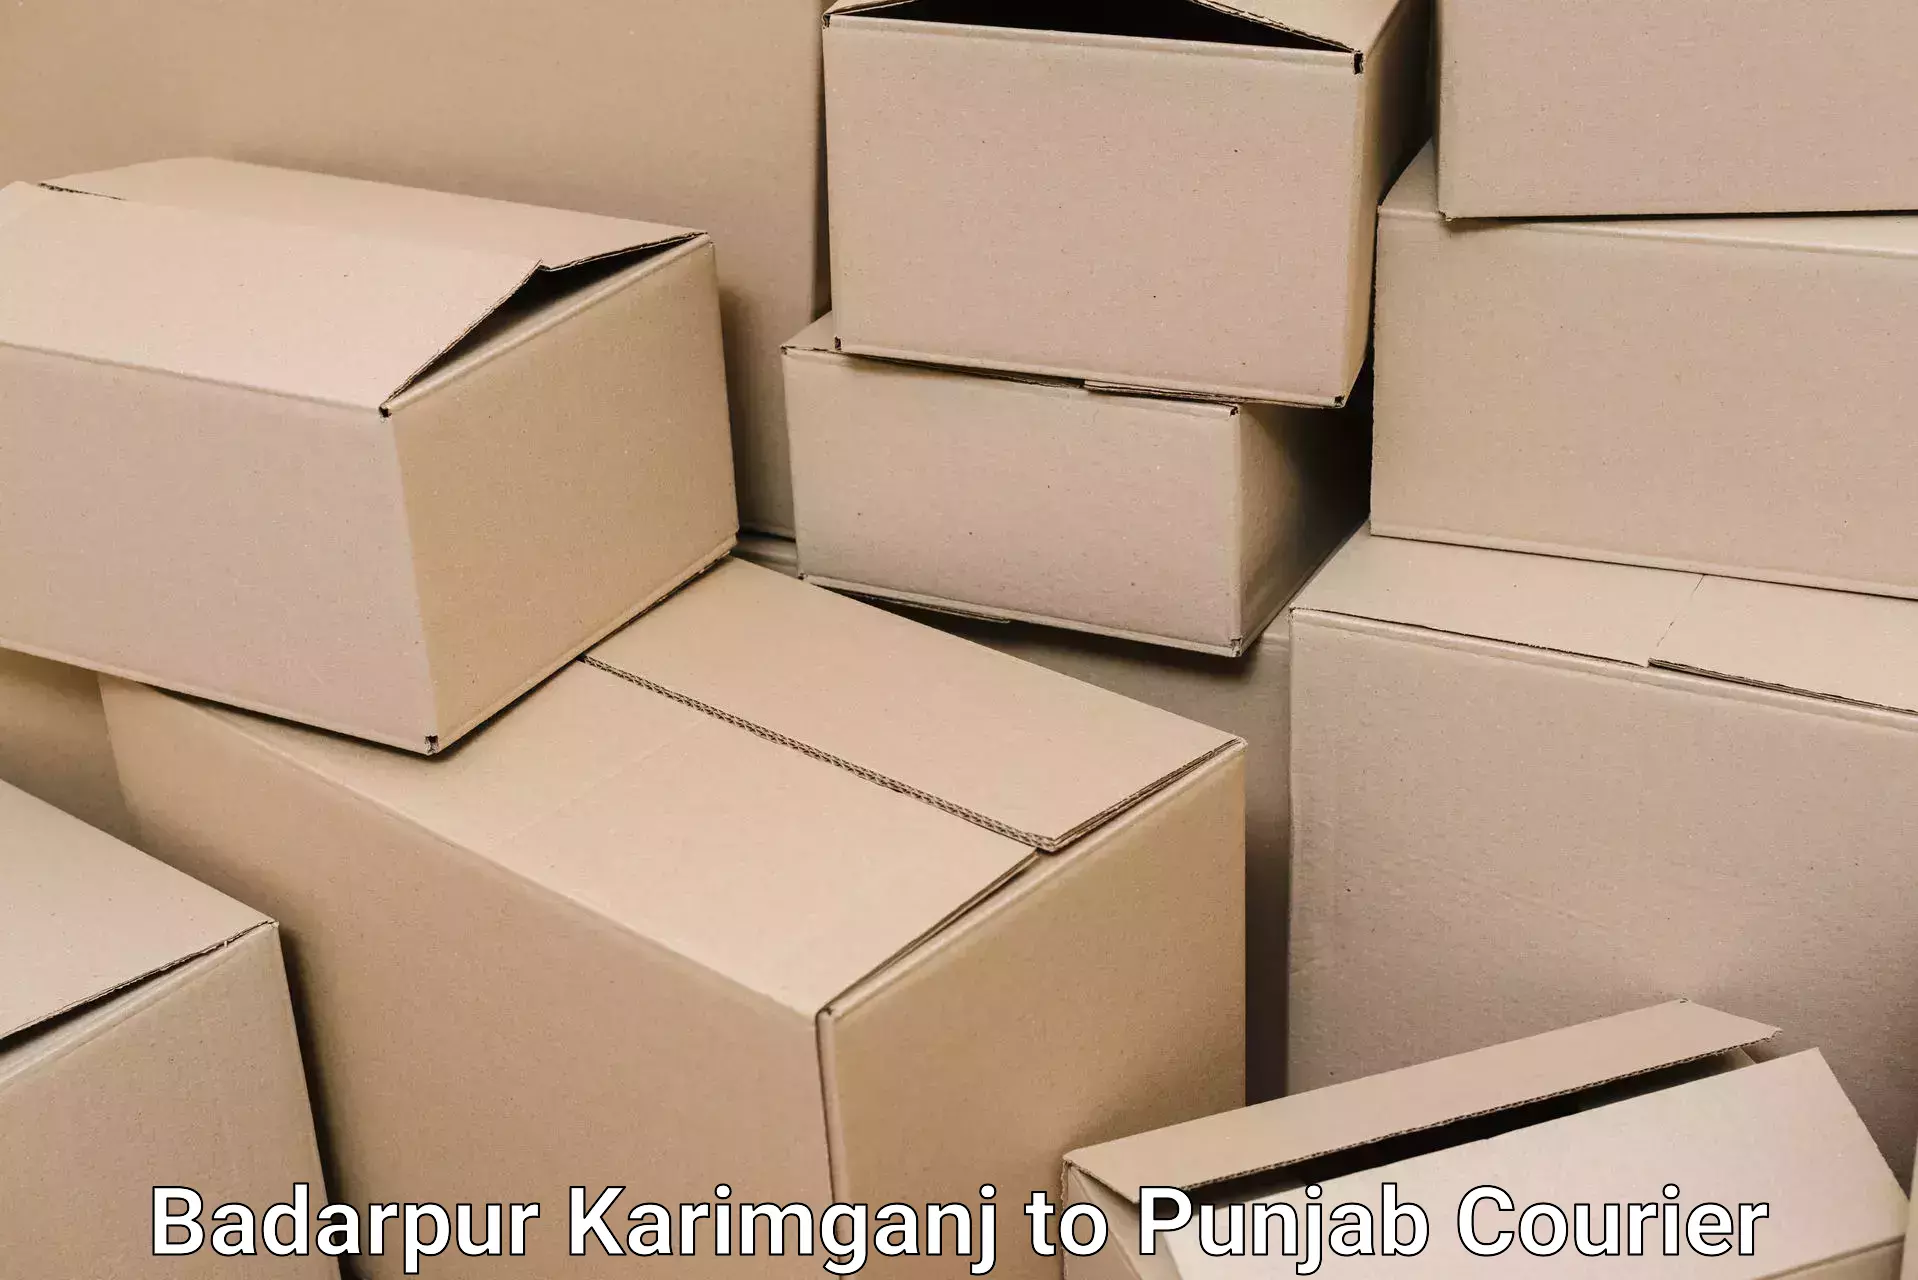 Efficient packing and moving Badarpur Karimganj to Hoshiarpur